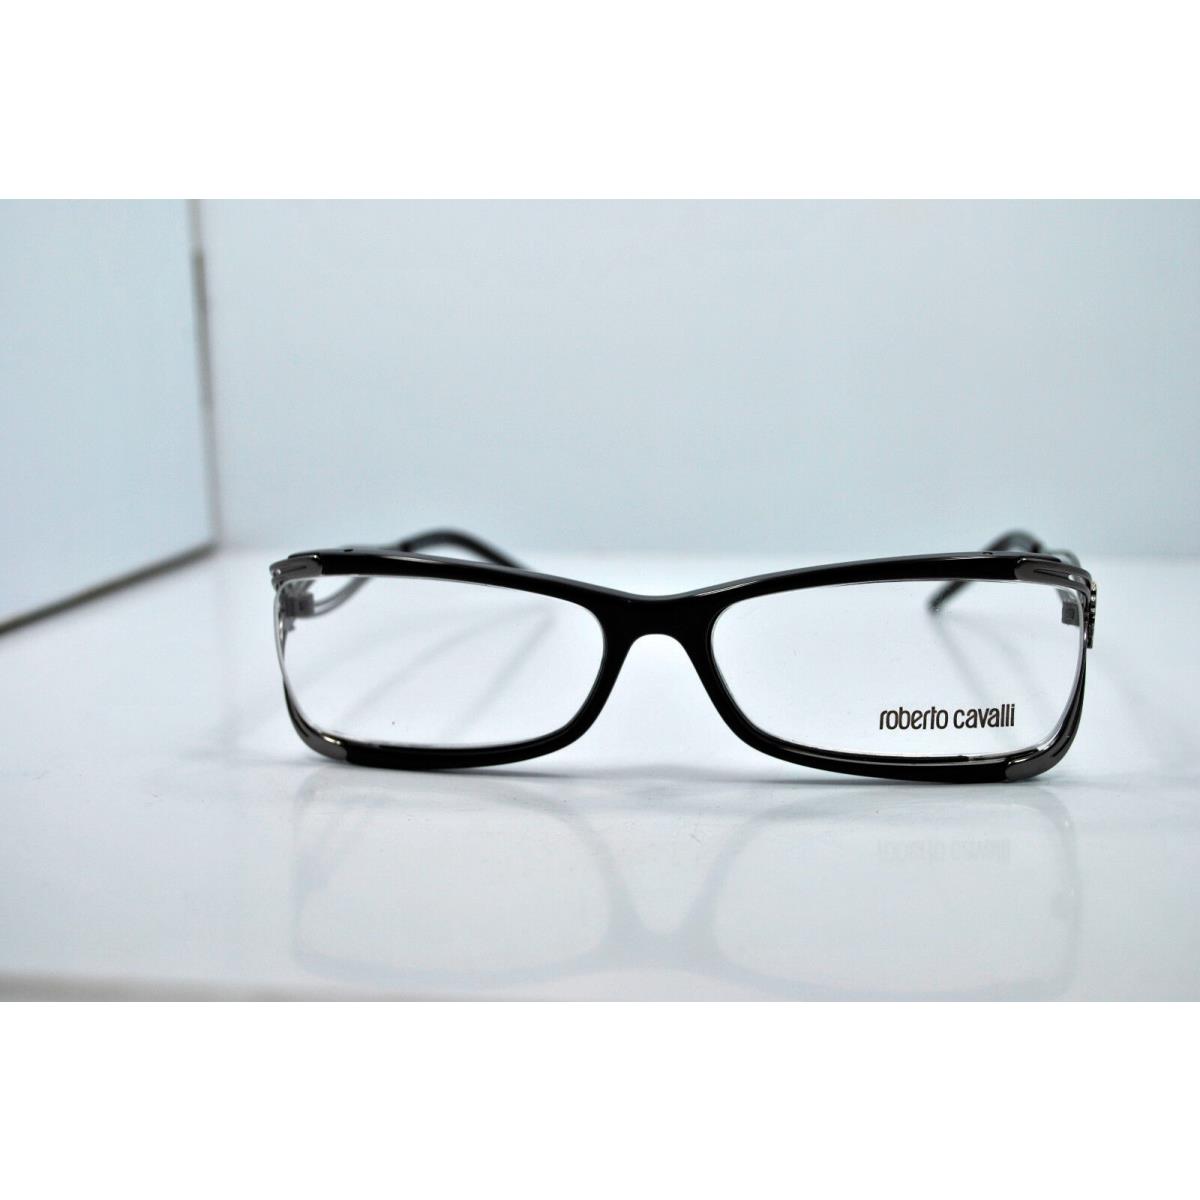 Roberto Cavalli eyeglasses  - 001 , Black Frame 0